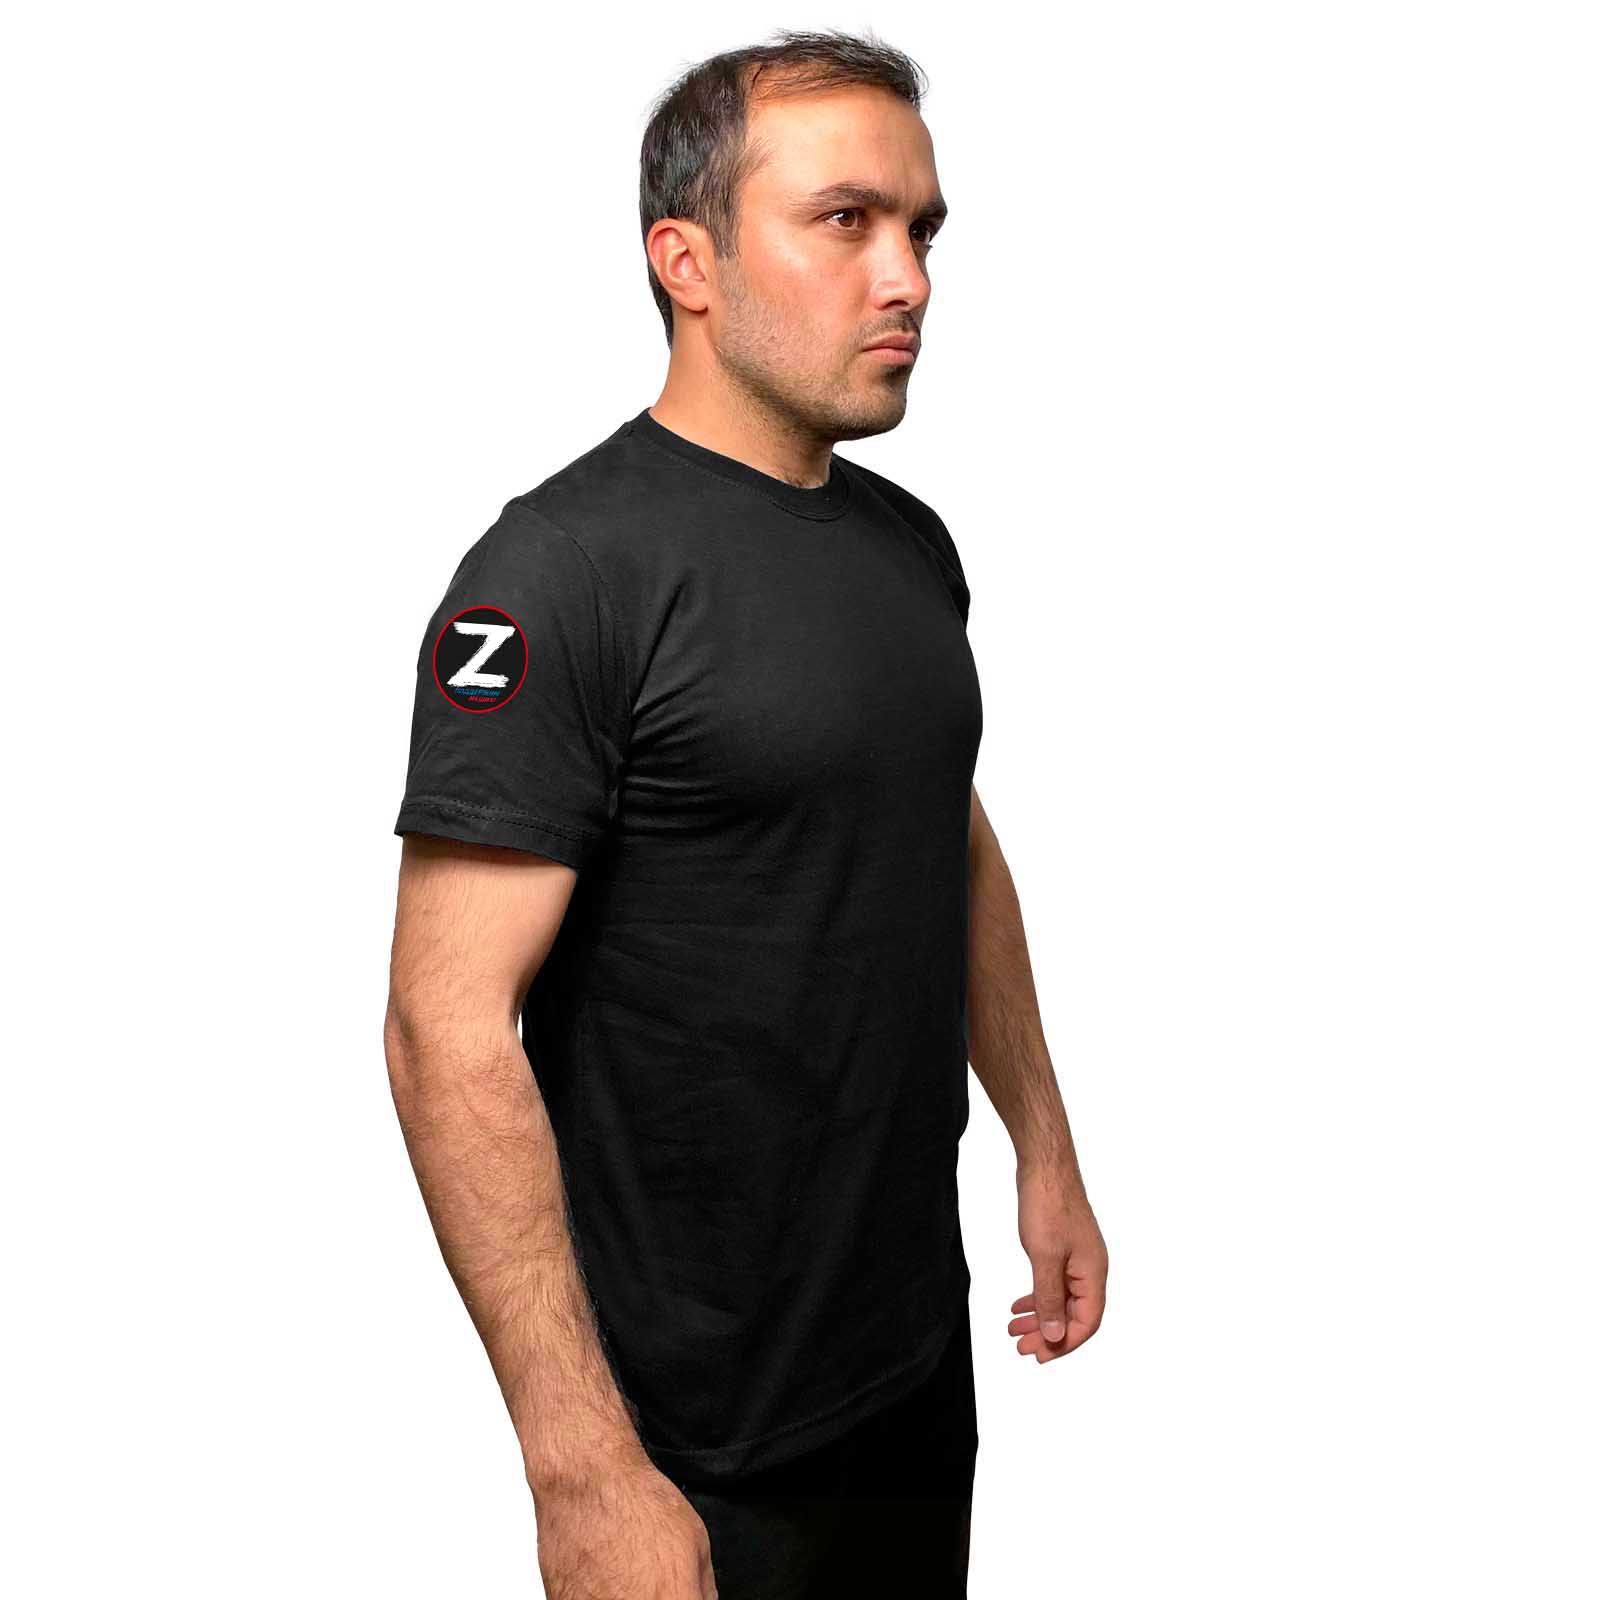 Чёрная футболка с термотрансфером Z на рукаве